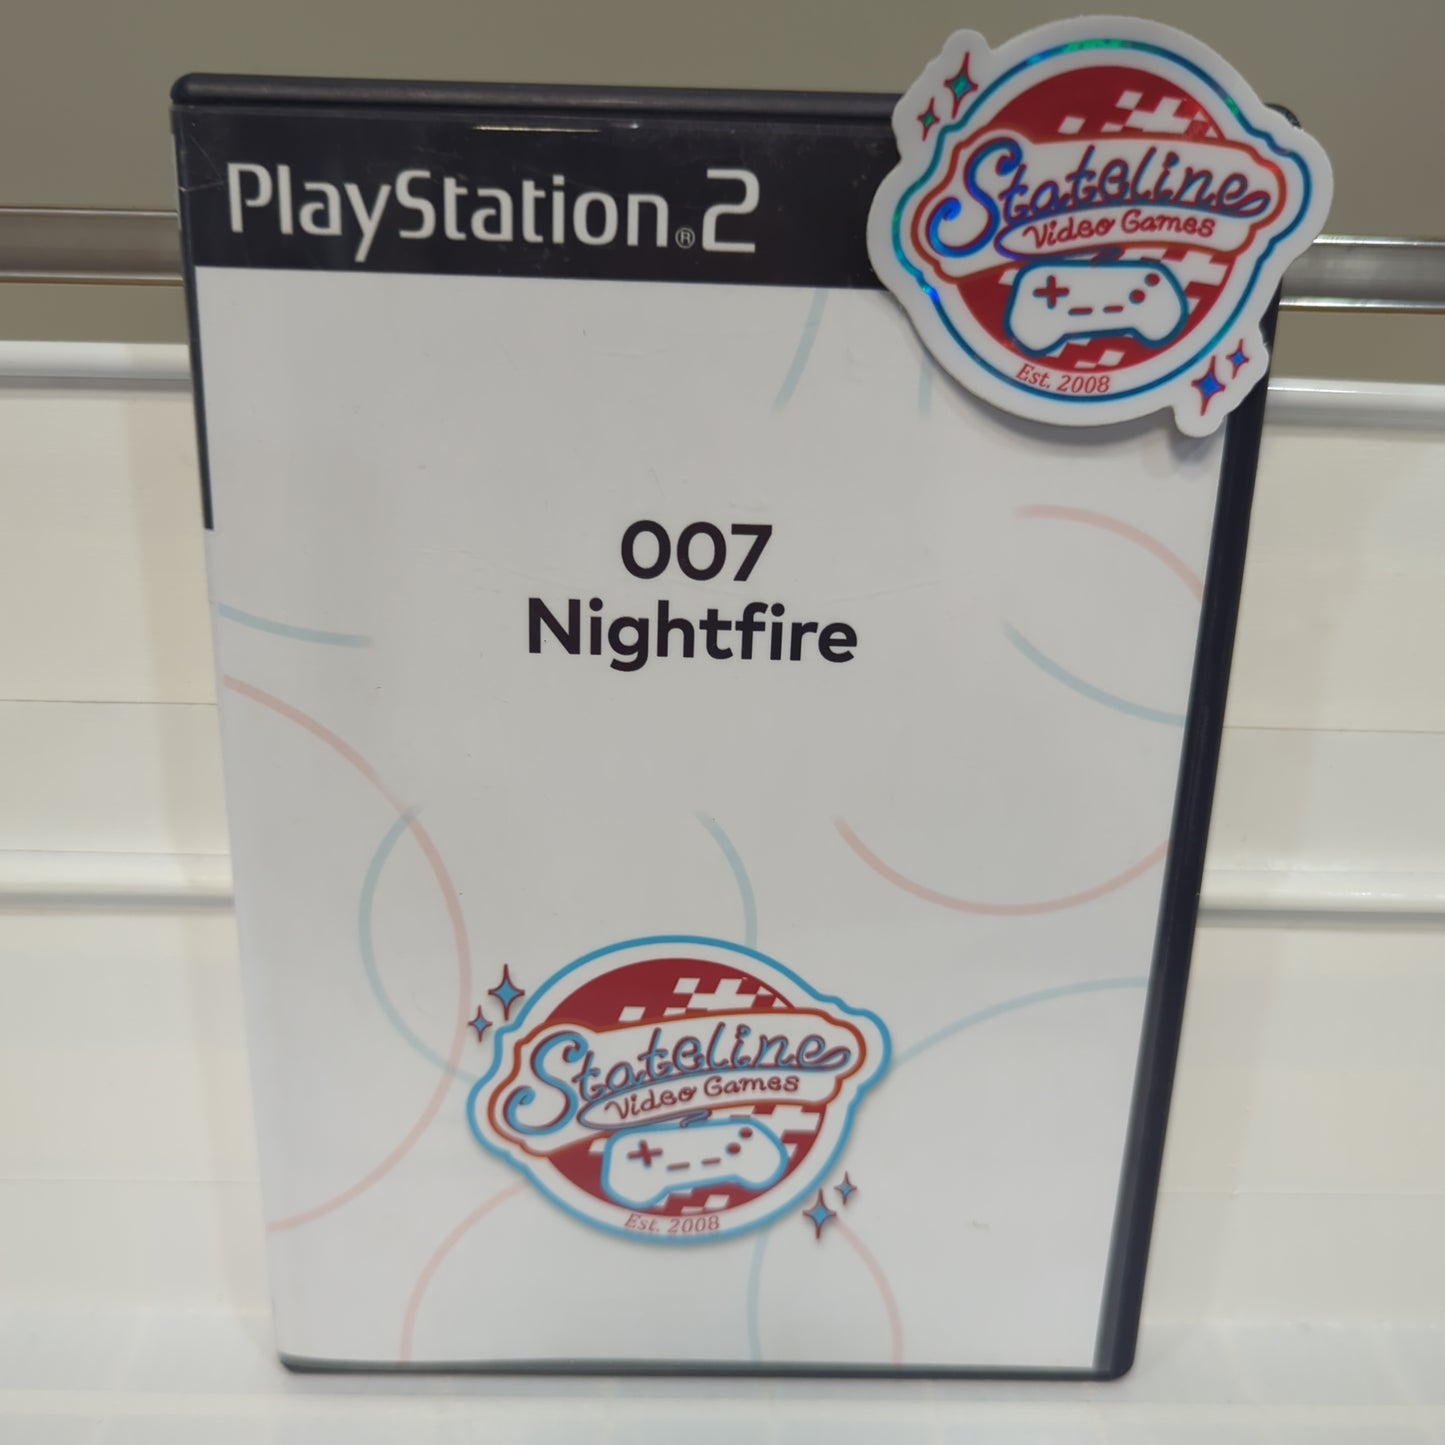 007 Nightfire - Playstation 2